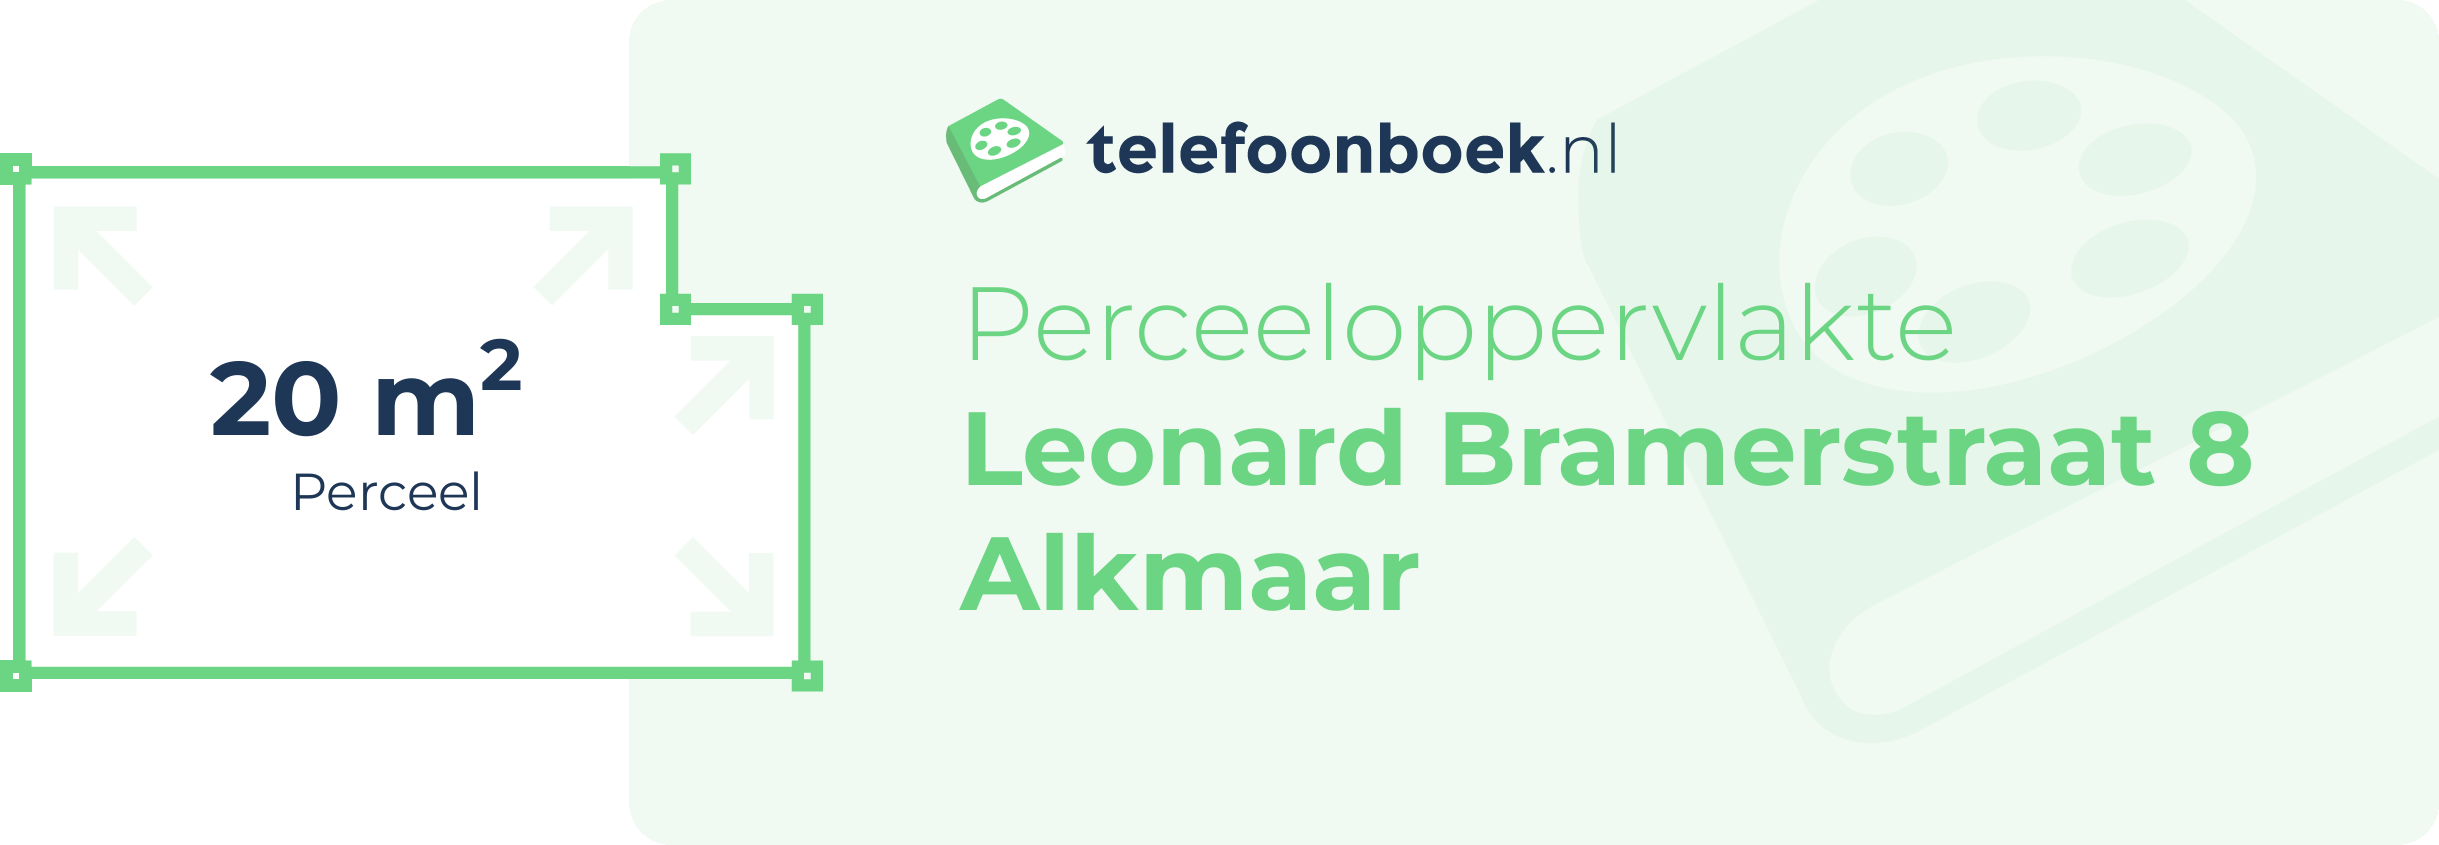 Perceeloppervlakte Leonard Bramerstraat 8 Alkmaar